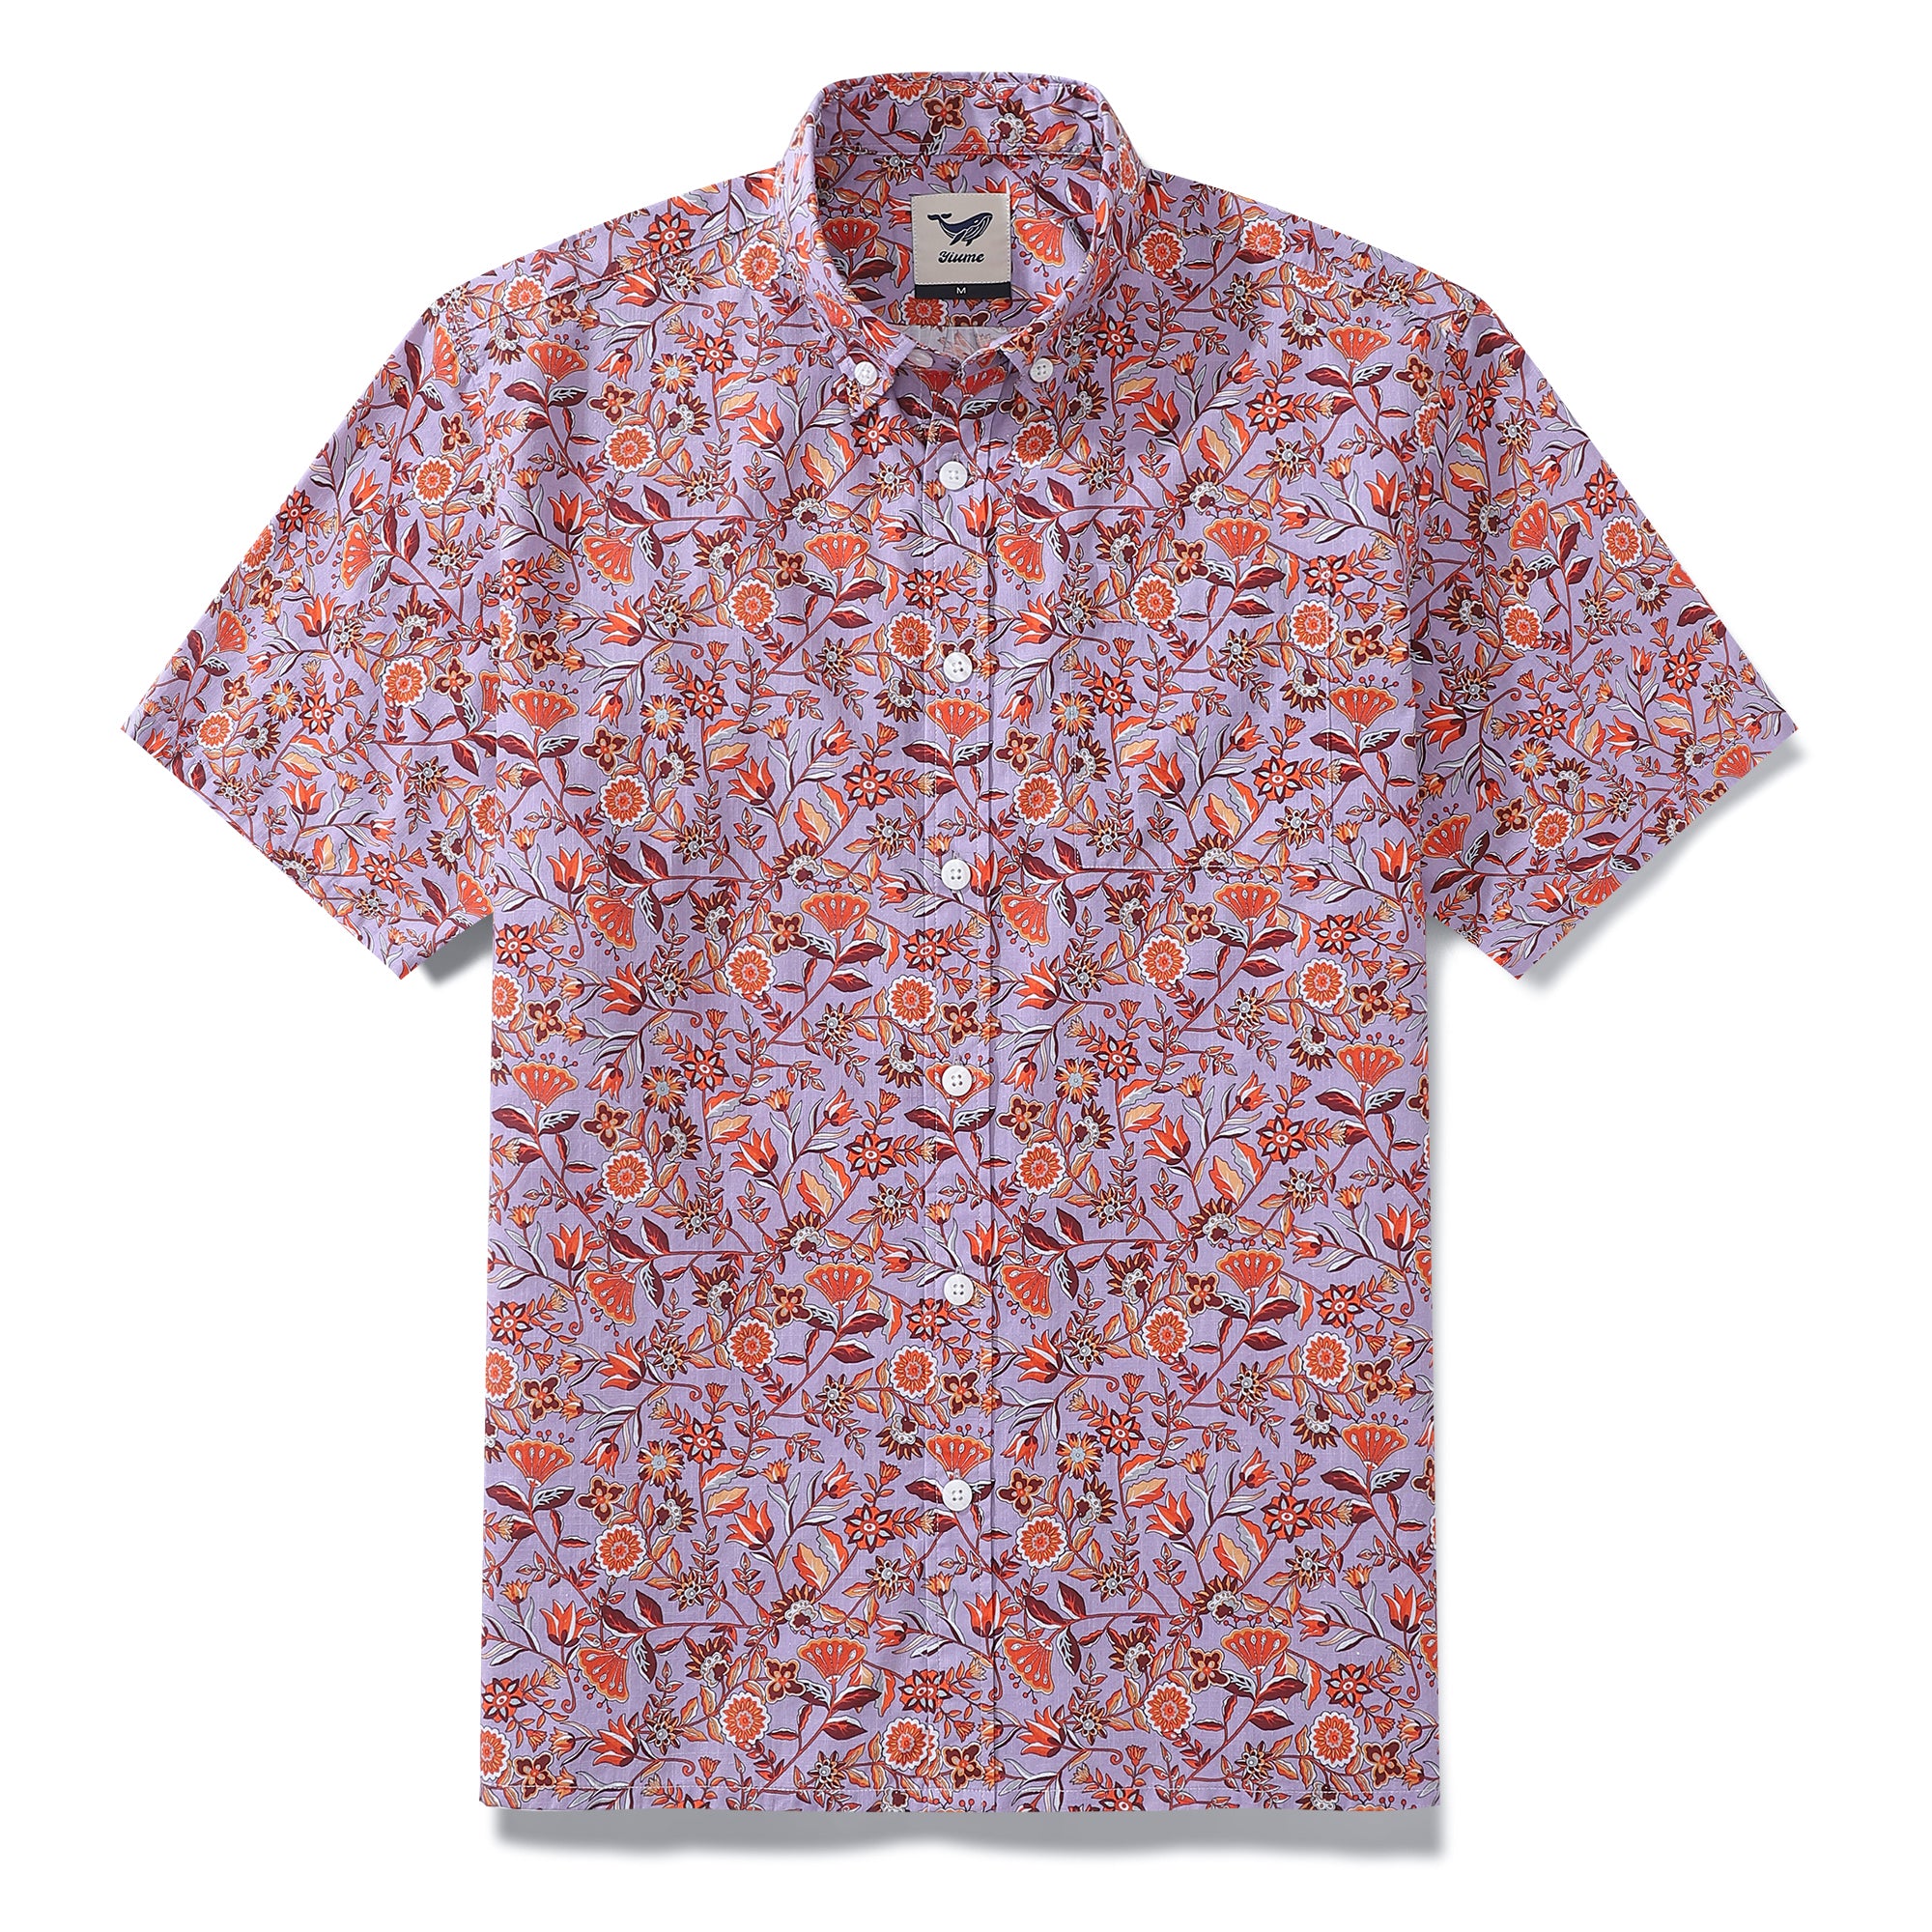 Men's Hawaiian Shirt Purple Orange Multicolored Print Cotton Button-down Short Sleeve Aloha Shirt